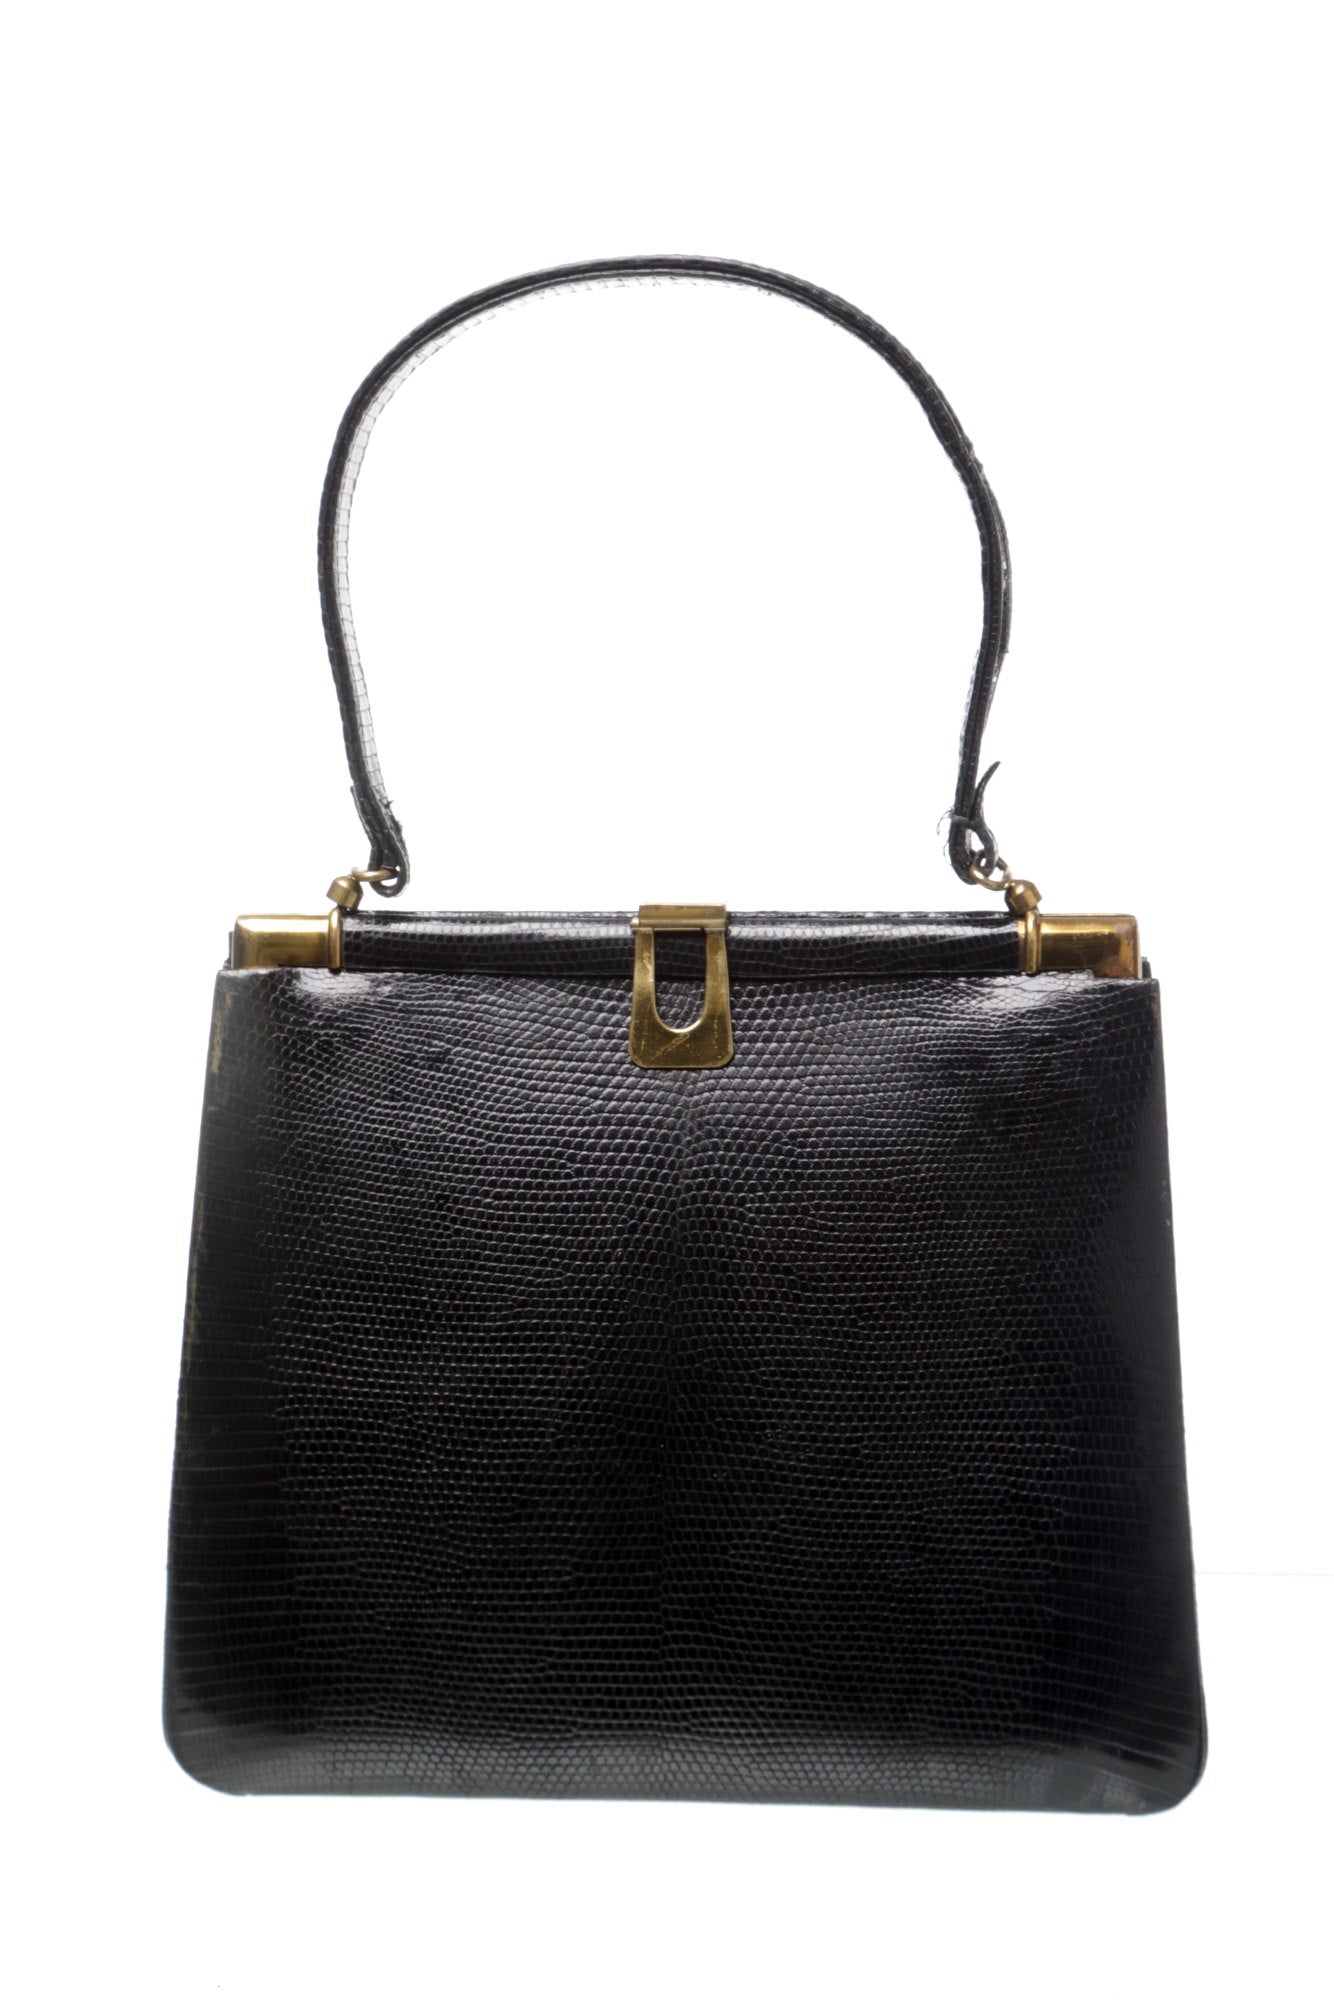 Black lizard handbag from the 60s